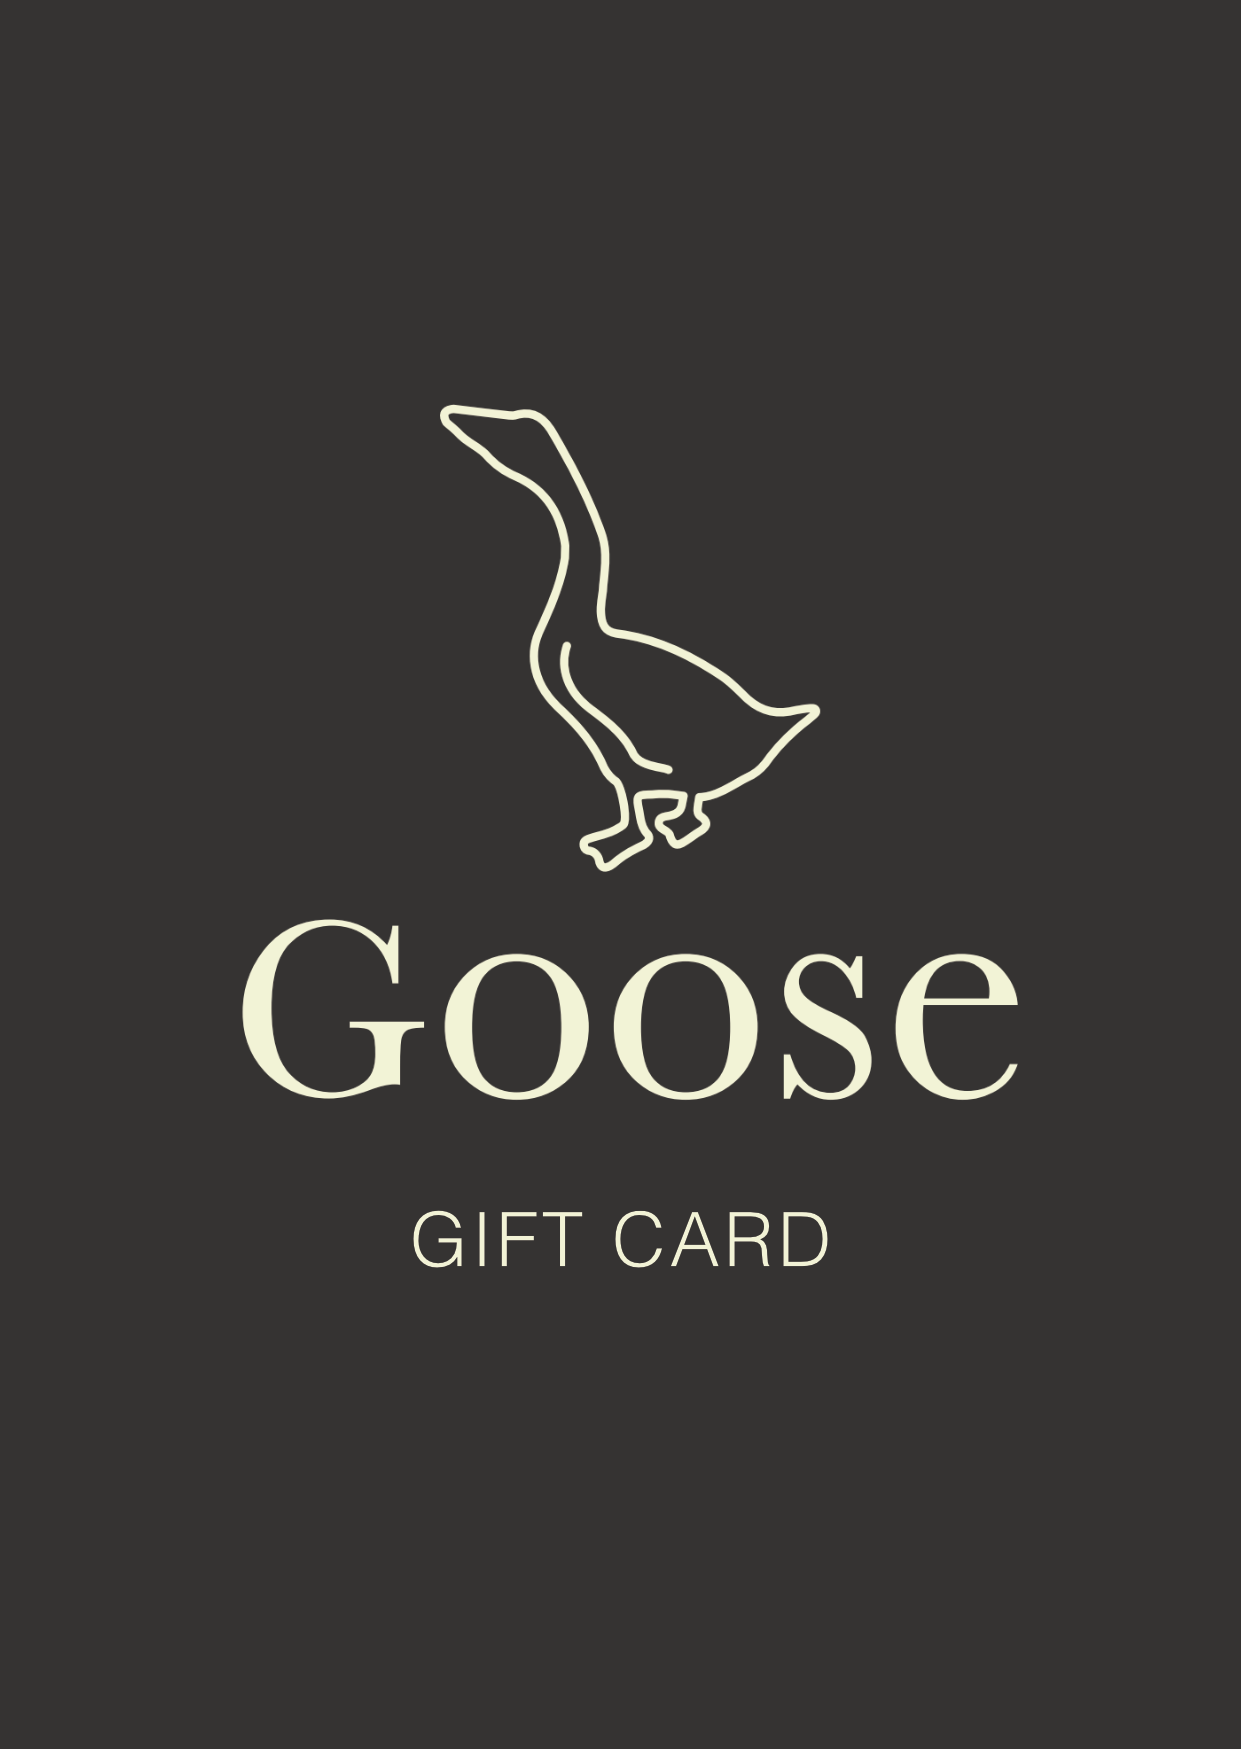 Goose Gift Card